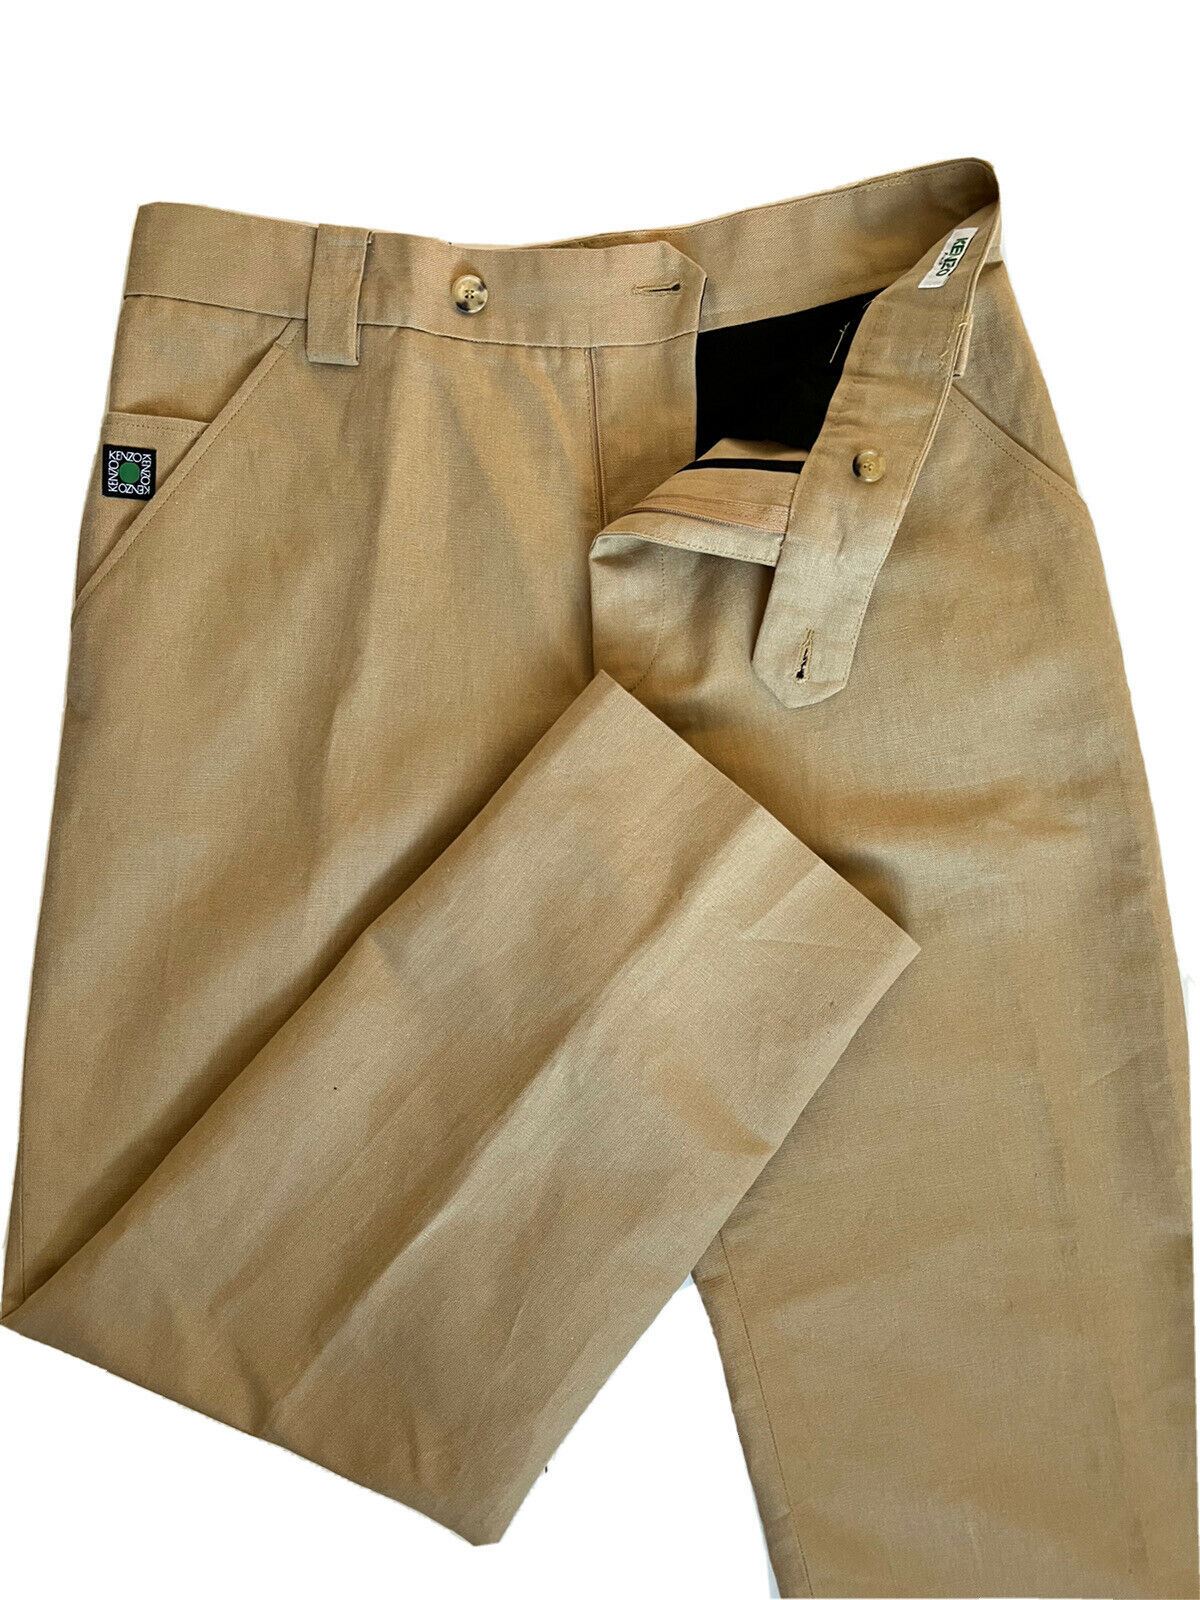 NWT $325 Kenzo Men's Dark Beige Casual Linen Pants Size 38 US (54 Euro)